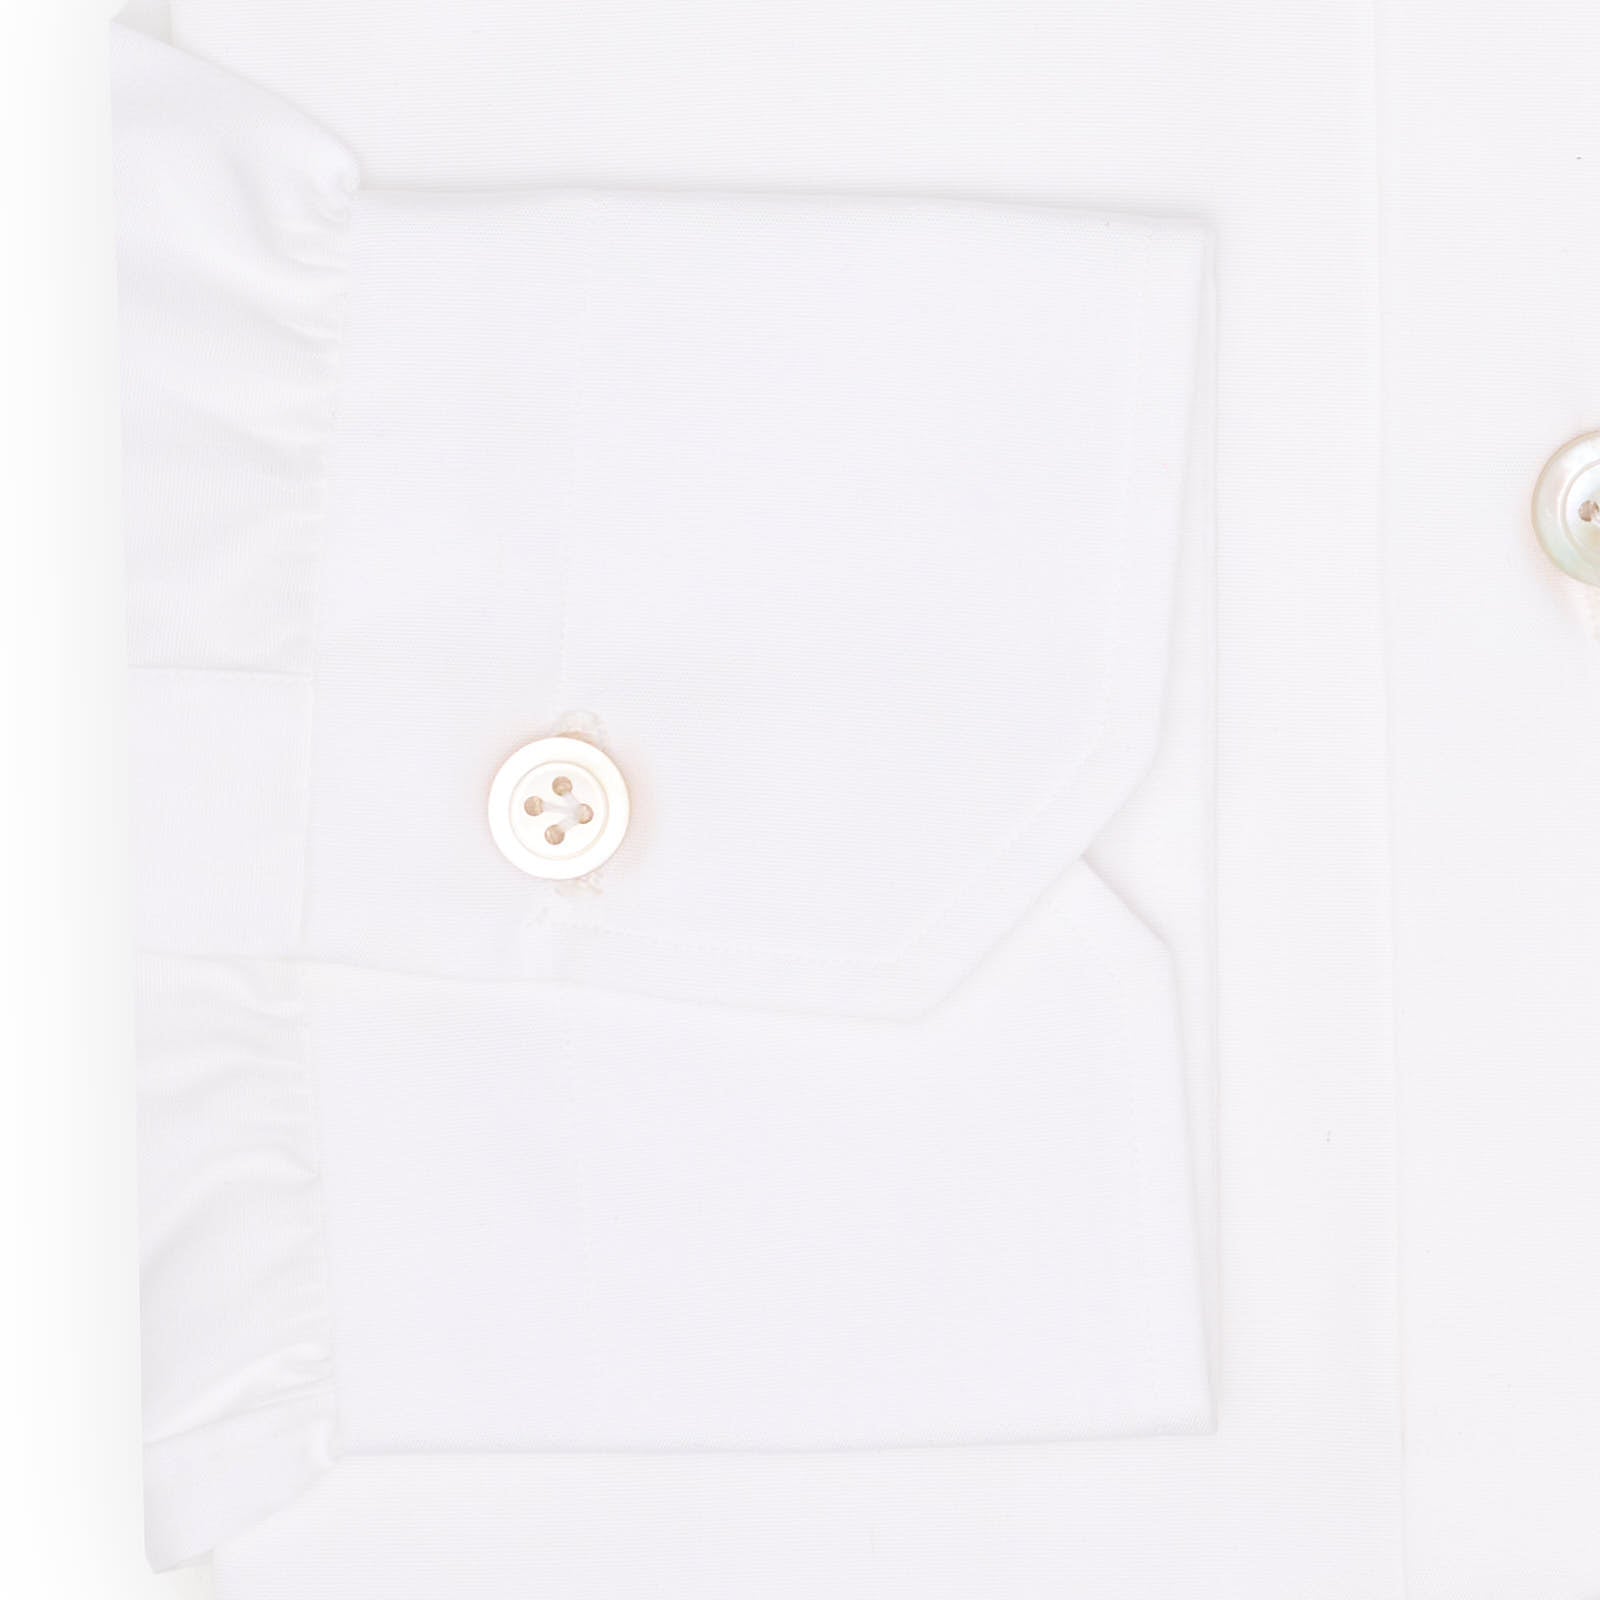 KITON Napoli Handmade White Poplin Cotton Button-Down Dress Shirt EU 39 NEW US 15.5